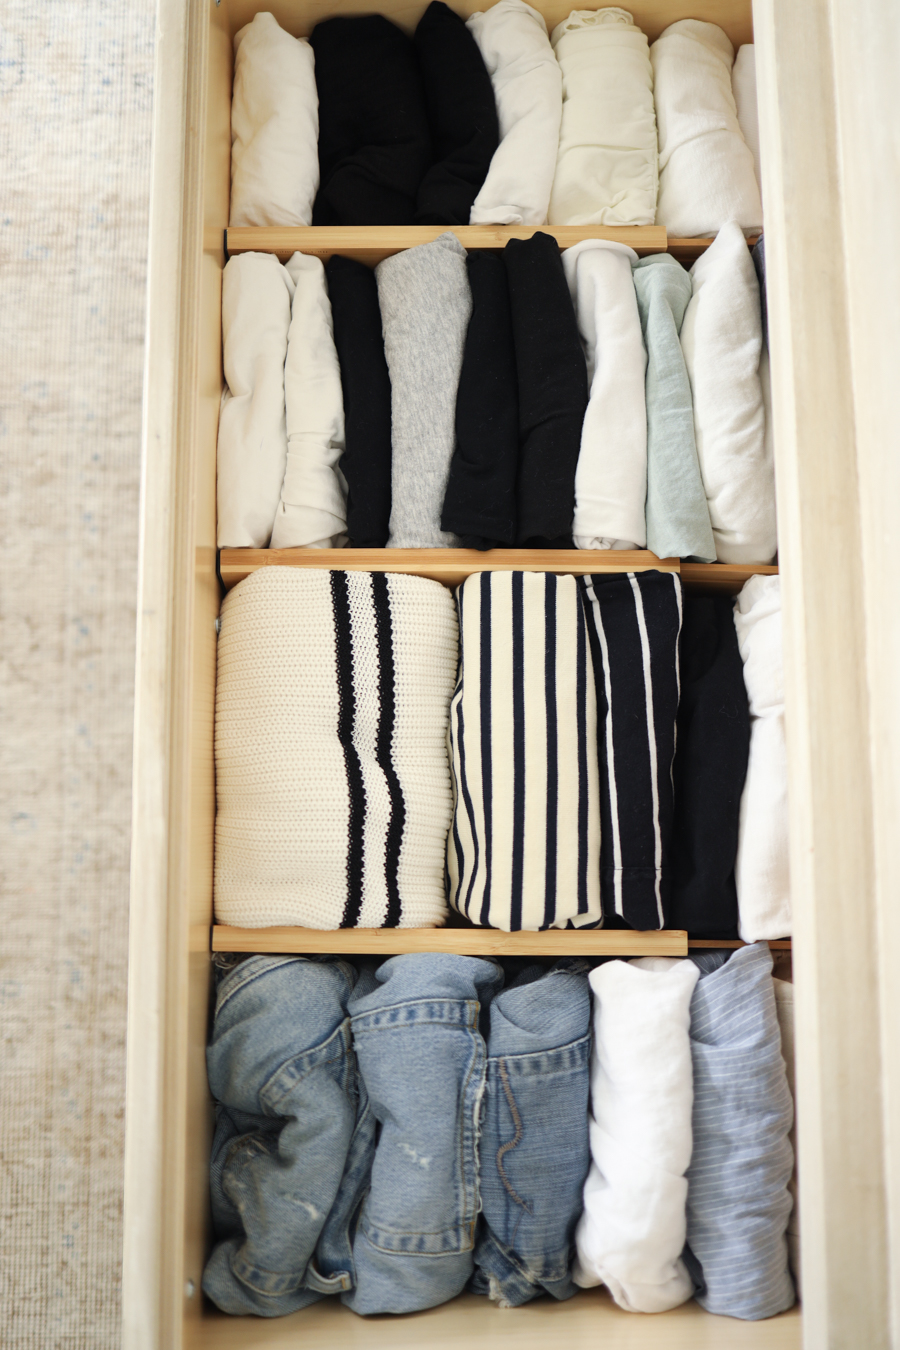 Home Storage and Organization - The Lane to Fashion